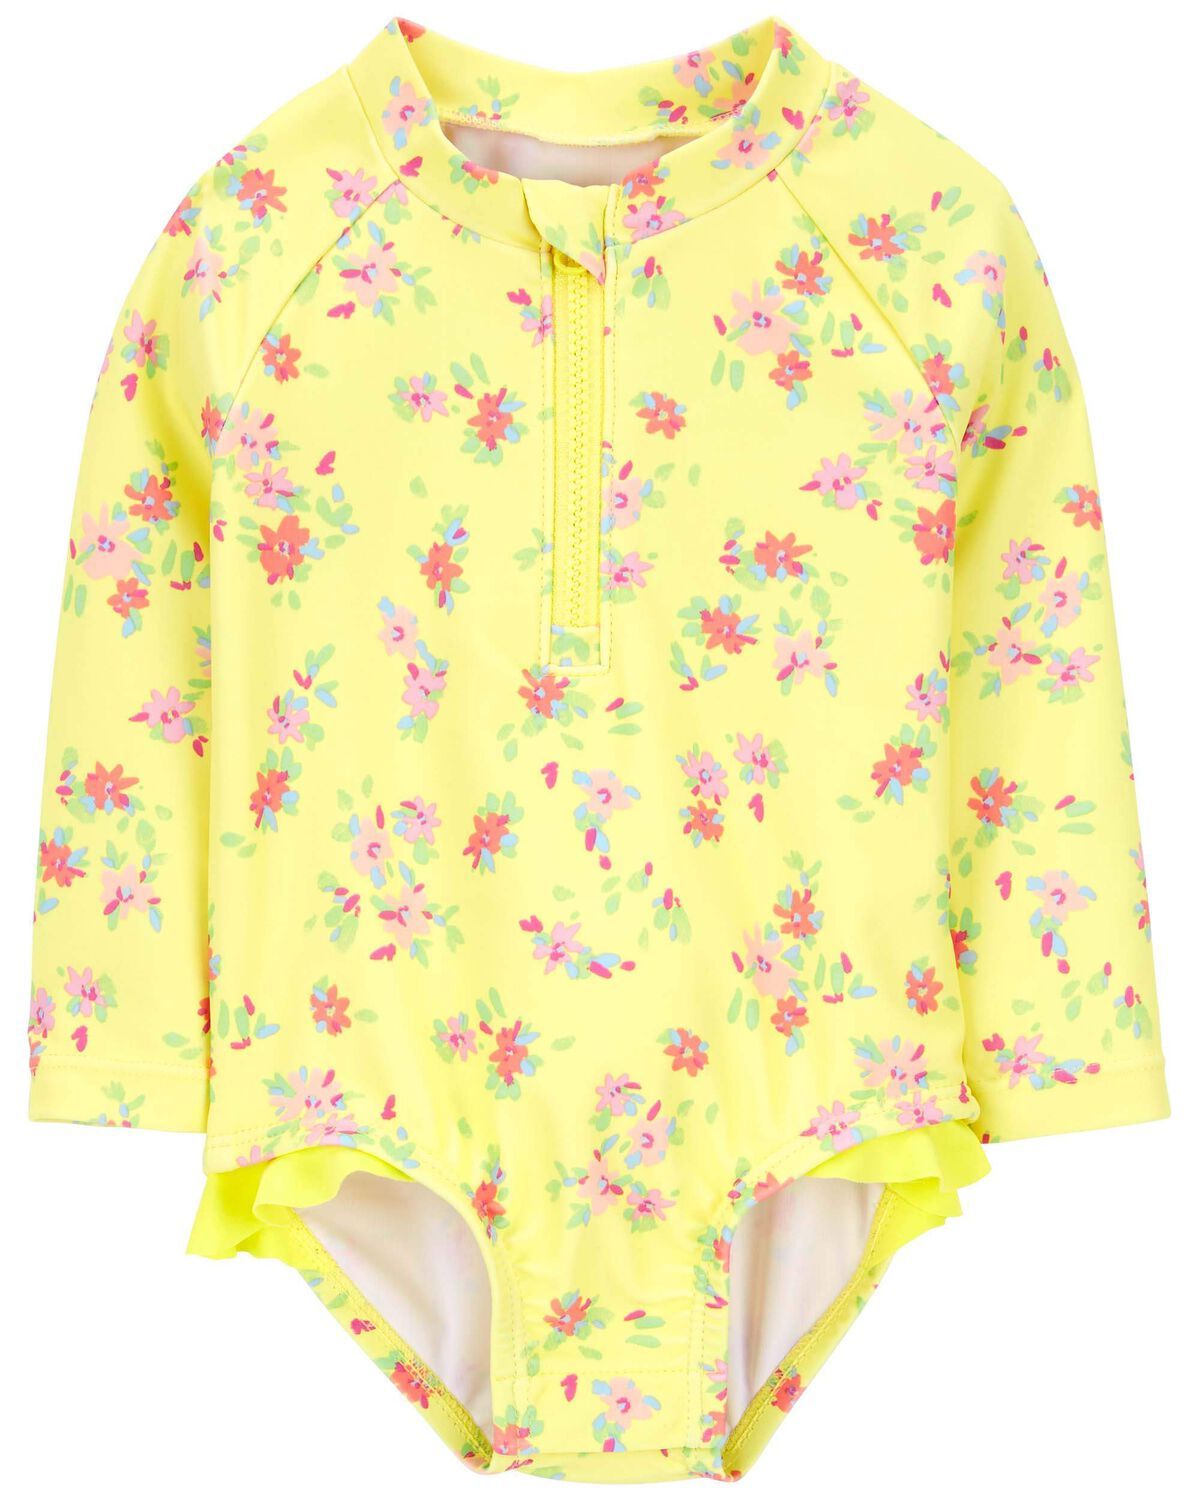 Yellow Baby 1-Piece Ruffle Swimsuit | carters.com | Carter's